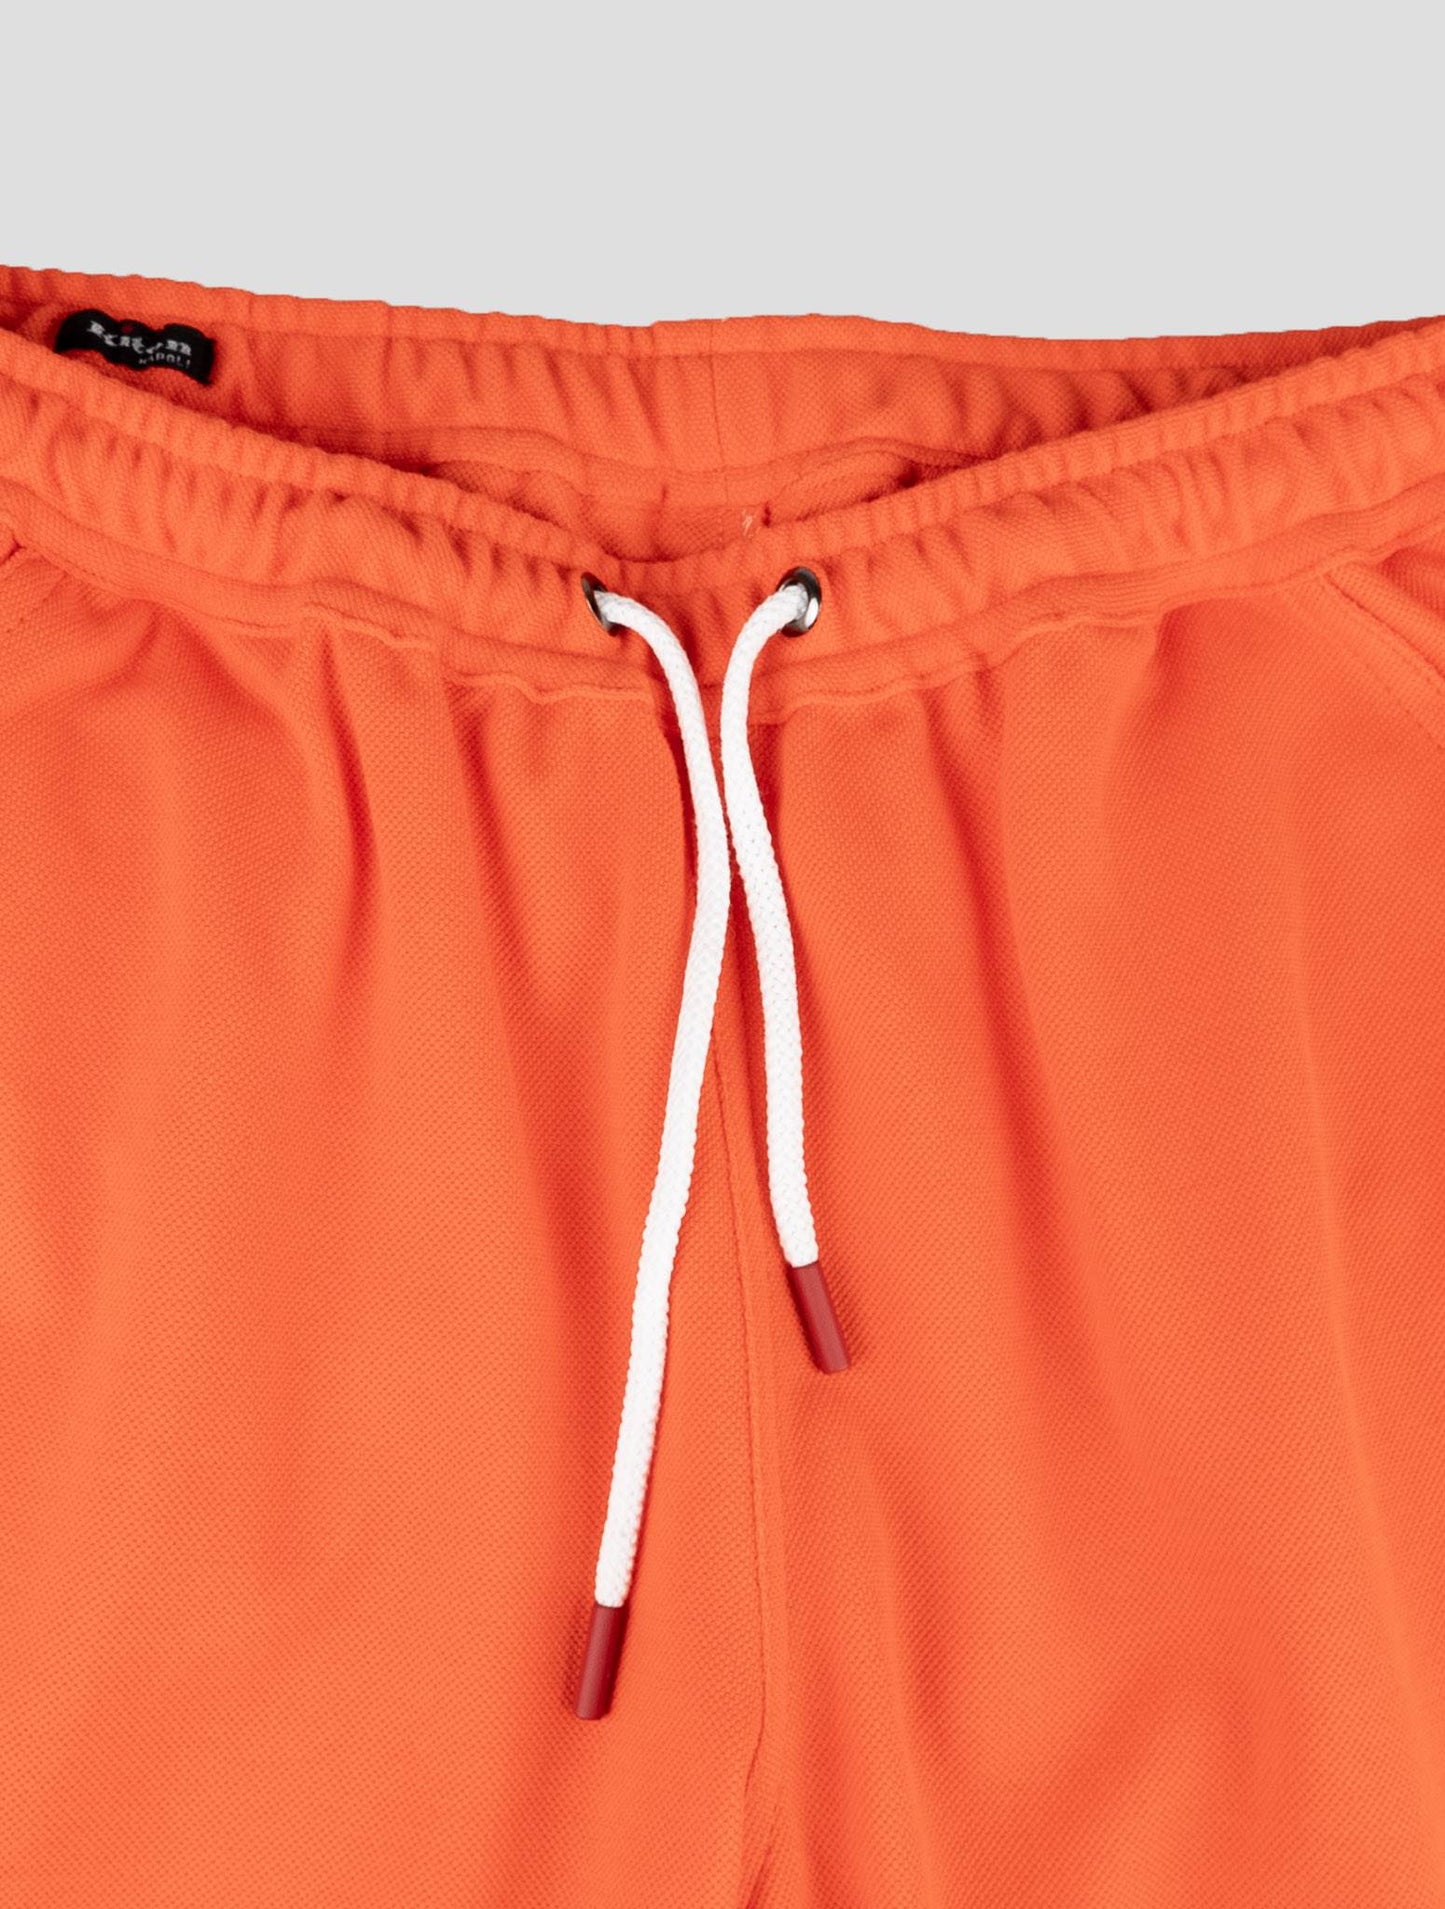 Pantalones cortos de algodón naranjas de Kiton